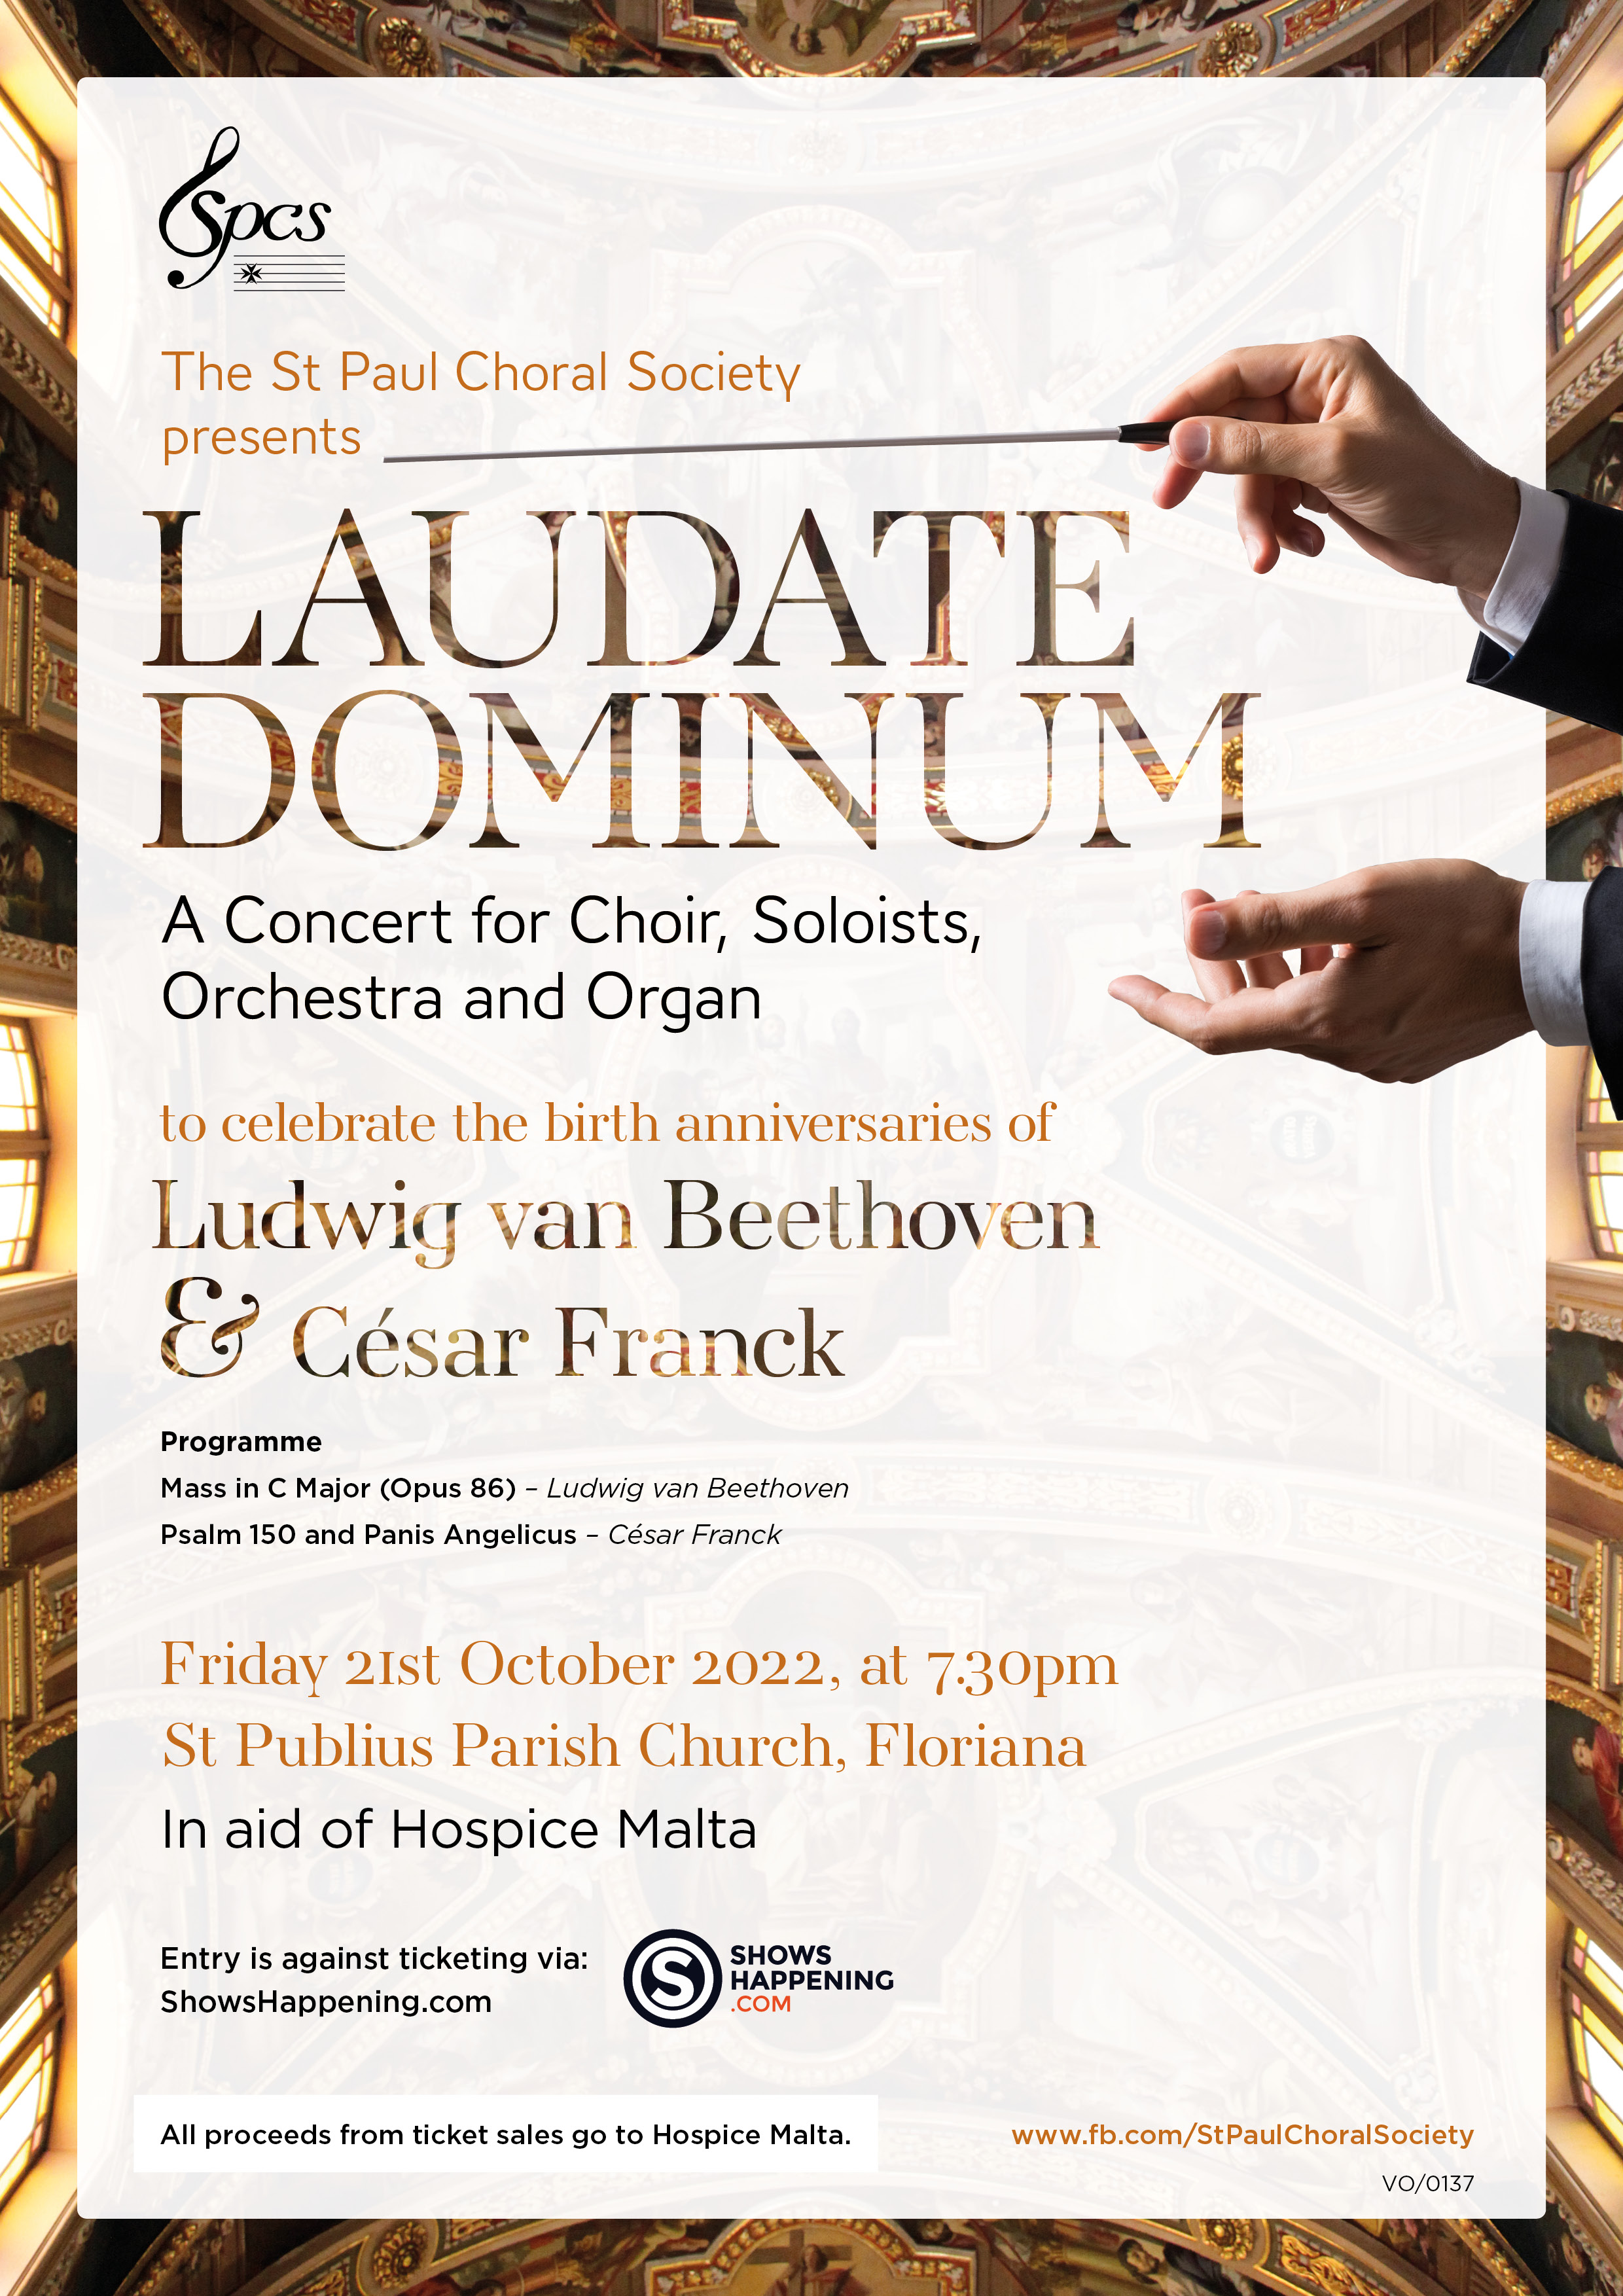 Laudate Dominum concerts at Mdina and Floriana